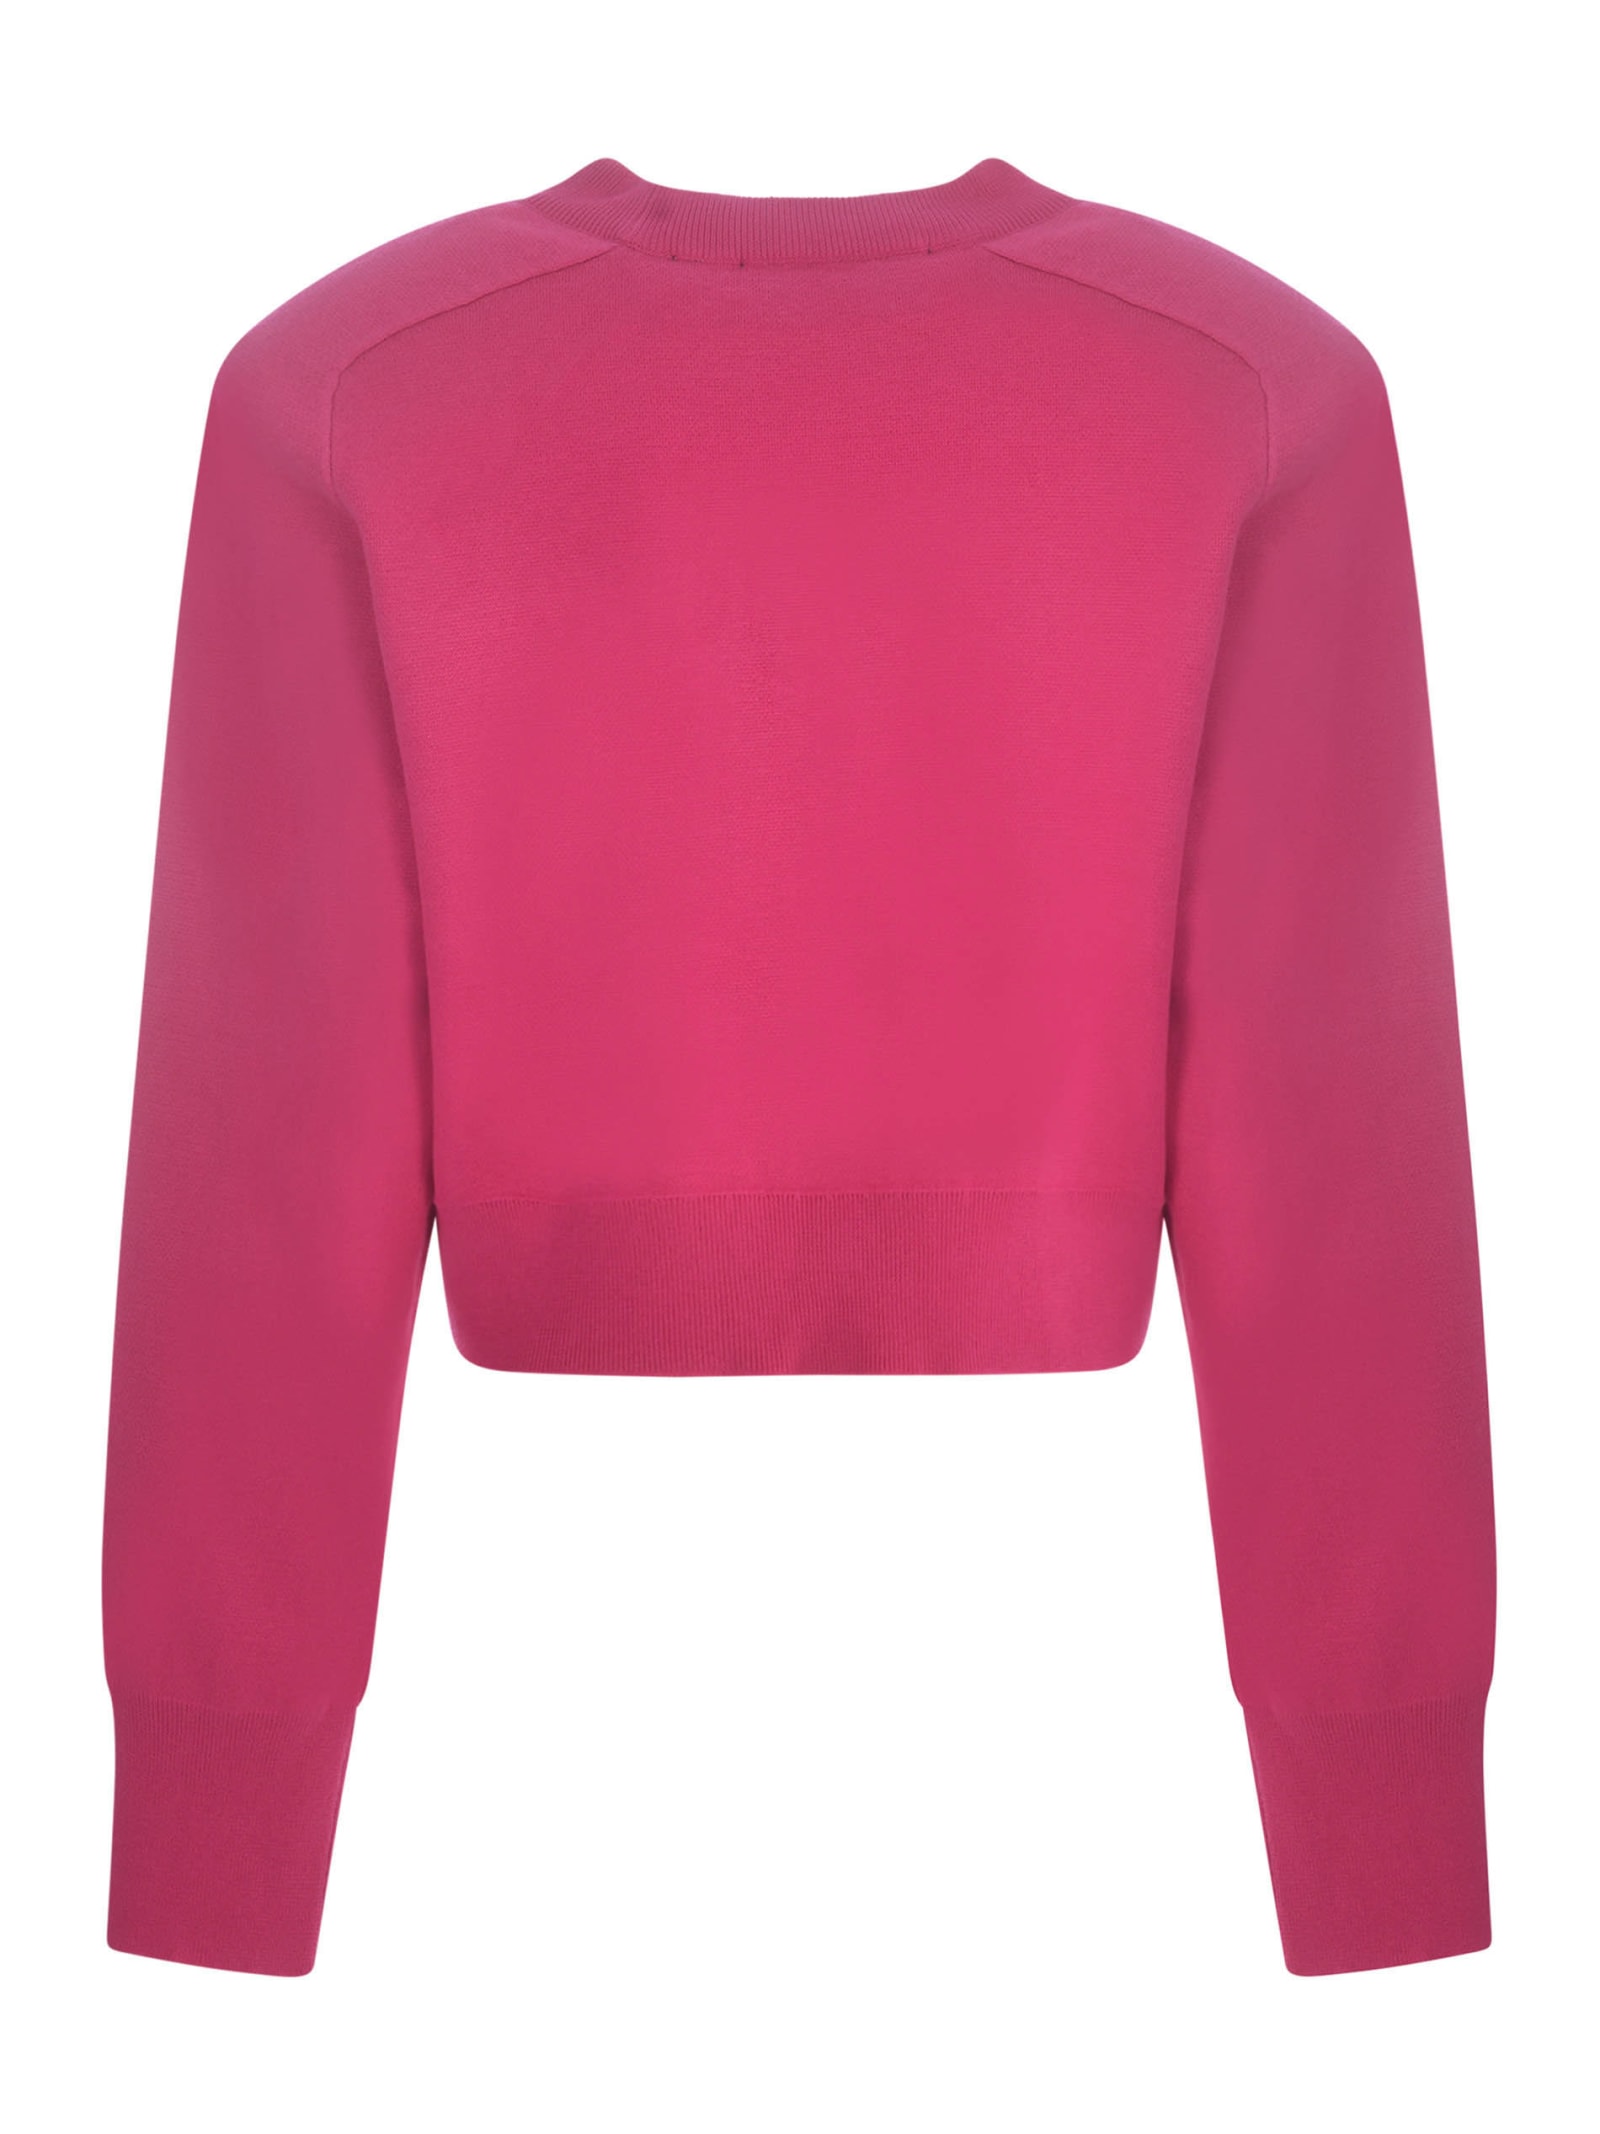 Shop Rotate Birger Christensen Sweatshirt Rotate In Cotton And Cashmere Blend In Fucsia